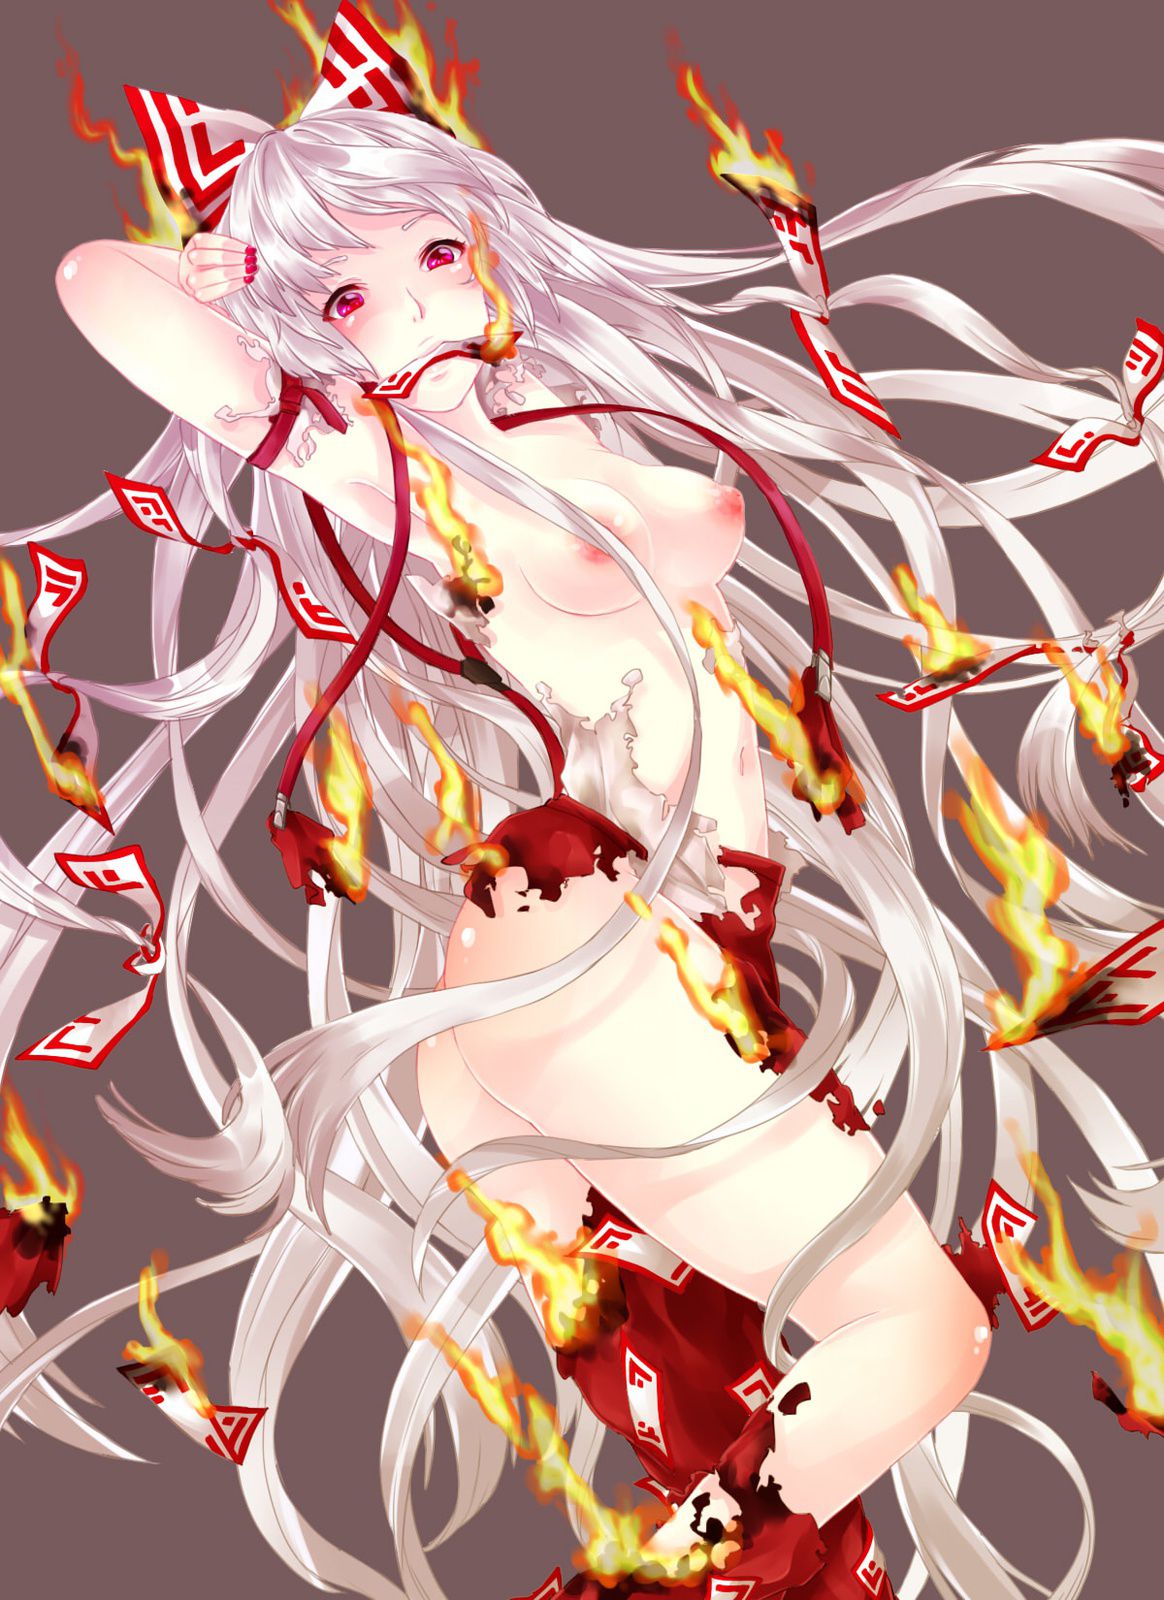 [Touhou Project] Fujiwara Sister Red's Inferno Erotic Image! Part 6 22